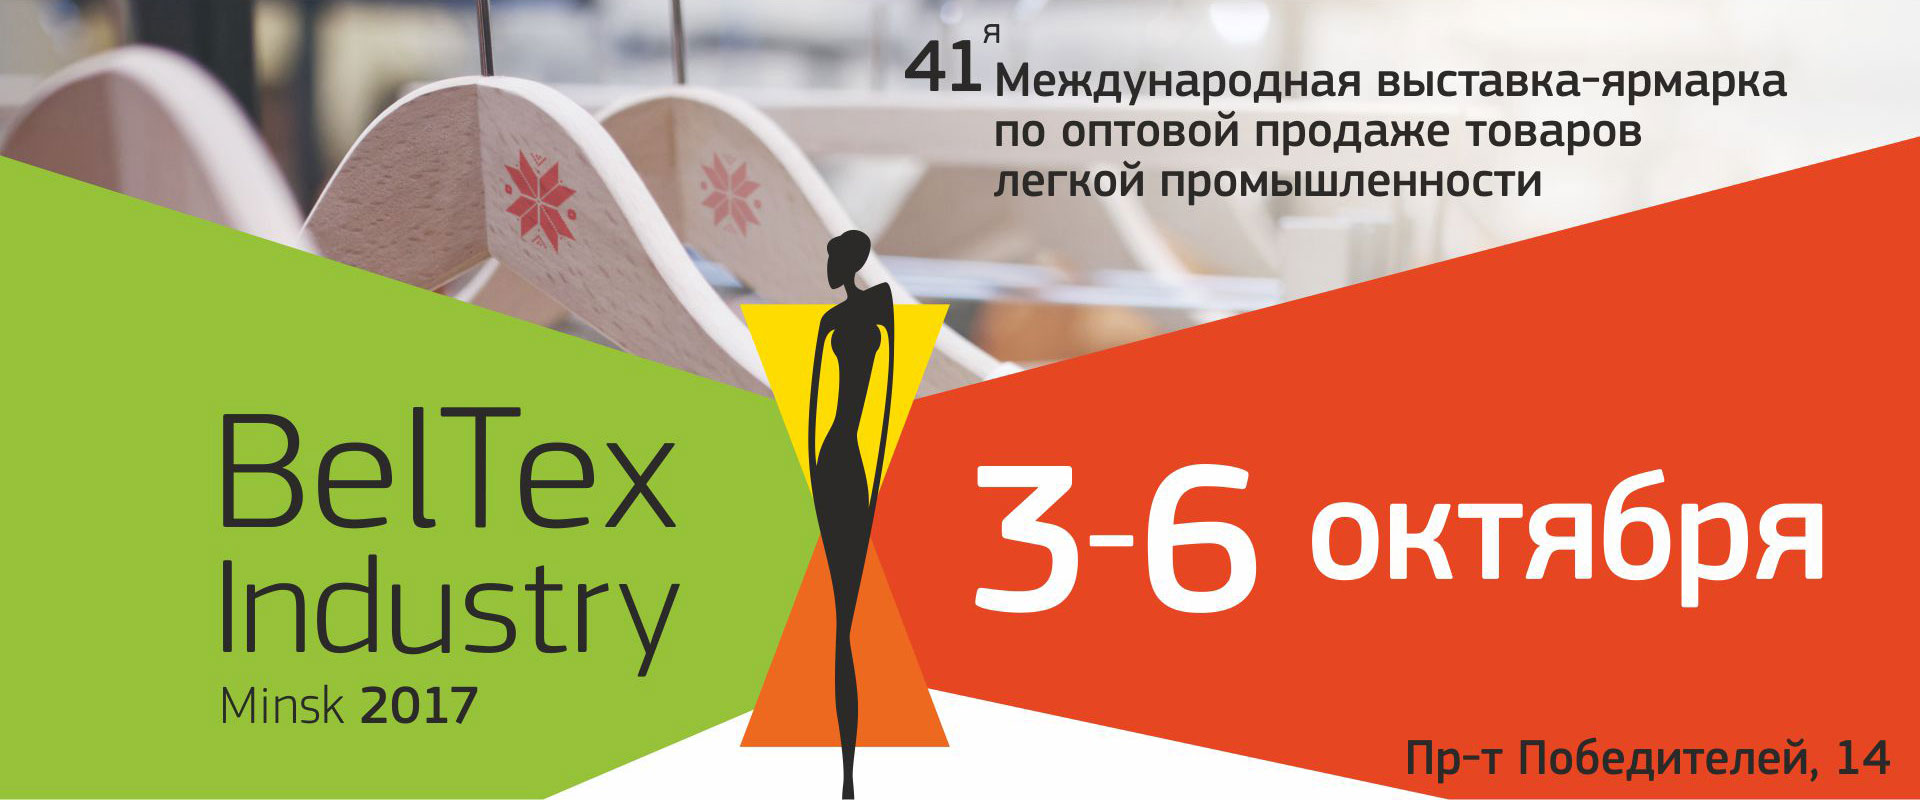 BelTexIndustry 2017 rus